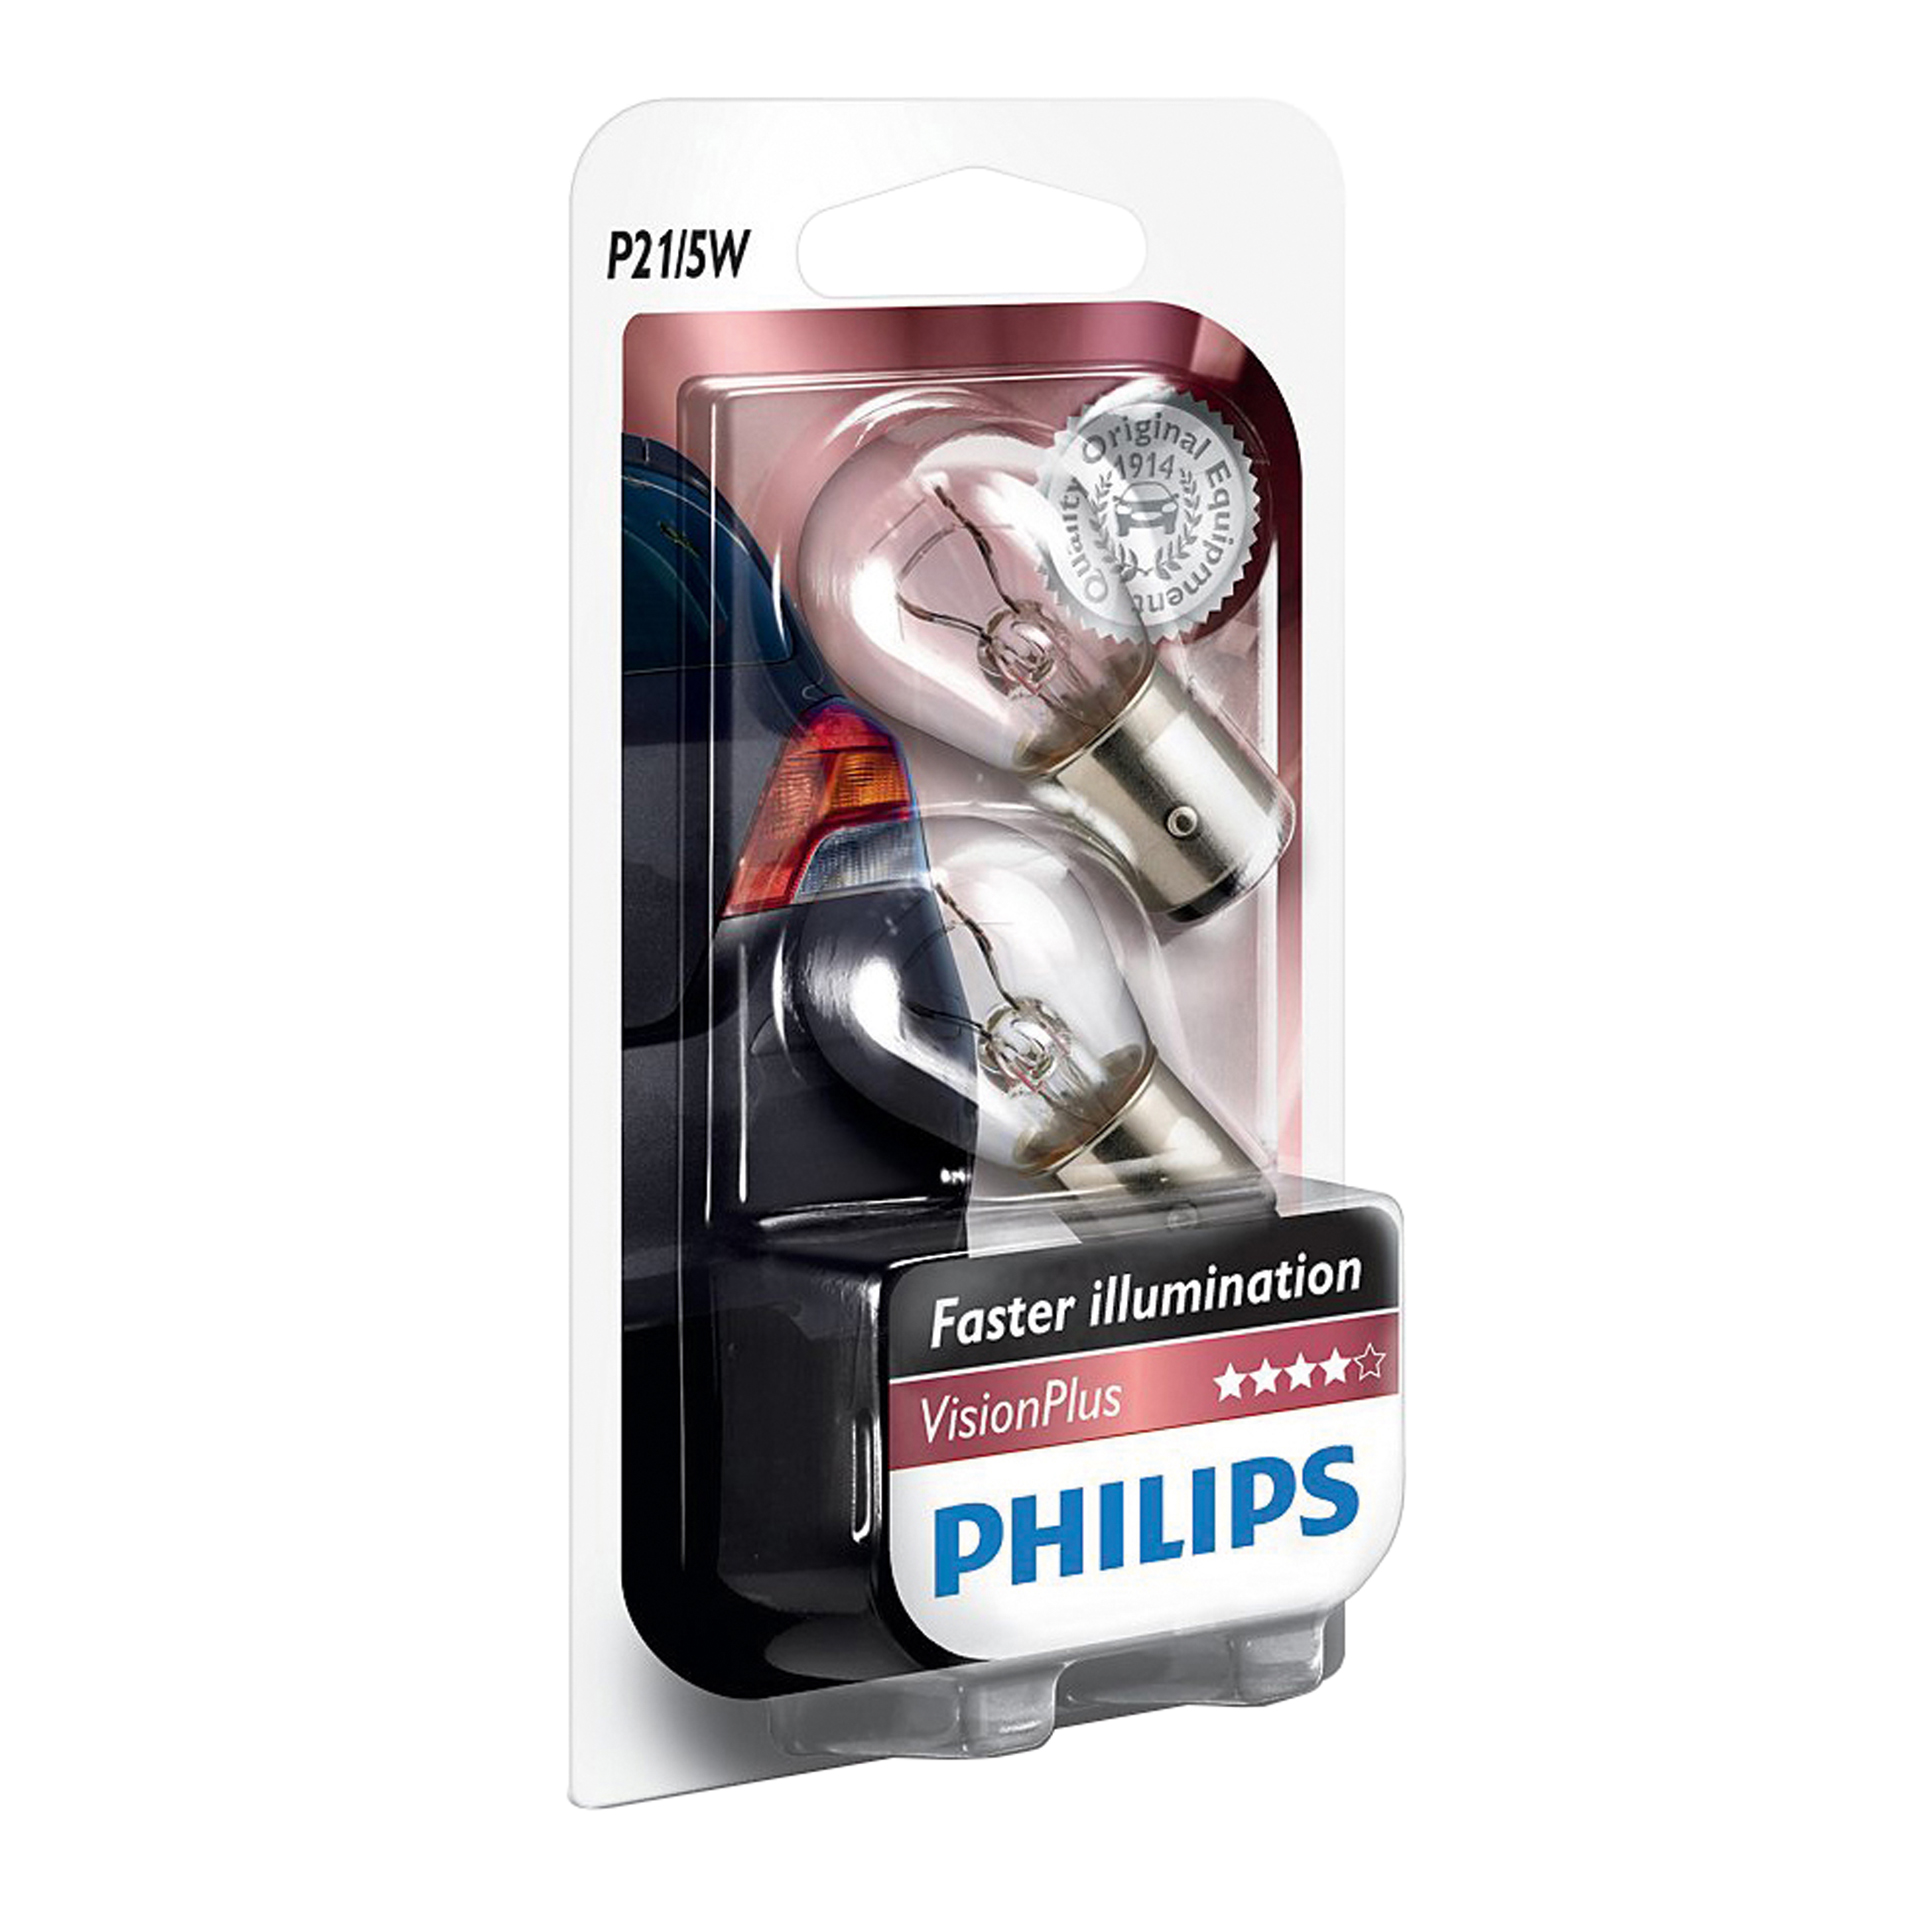 Philips Philips 12499VPB2 P21/5W VisionPlus 5W blister 0730527